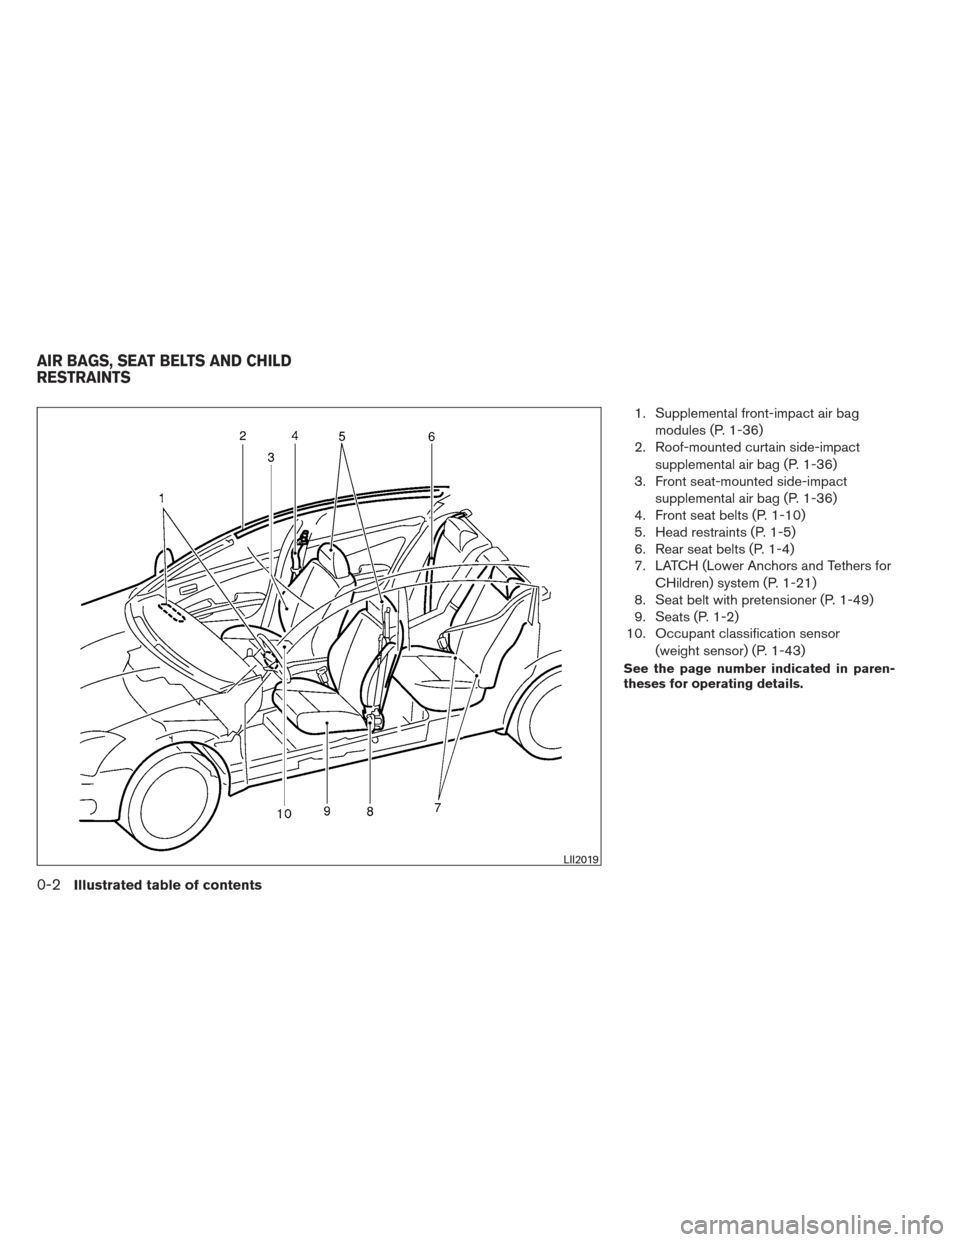 NISSAN VERSA SEDAN 2013 2.G Owners Manual 1. Supplemental front-impact air bagmodules (P. 1-36)
2. Roof-mounted curtain side-impact
supplemental air bag (P. 1-36)
3. Front seat-mounted side-impact
supplemental air bag (P. 1-36)
4. Front seat 